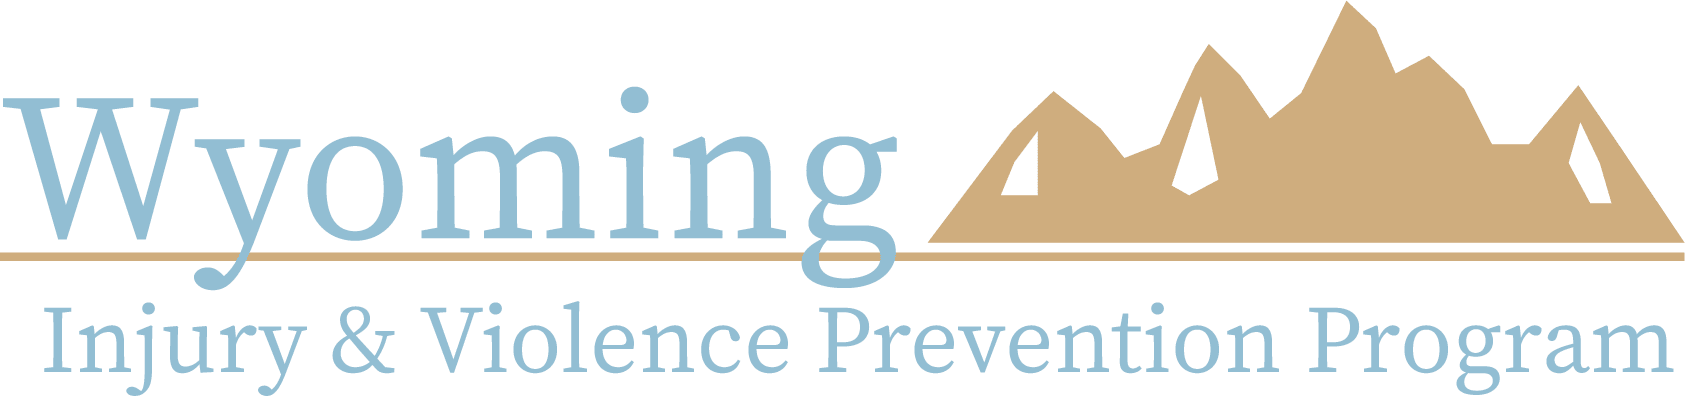 The Wyoming Injury & Violence Prevention Program logo